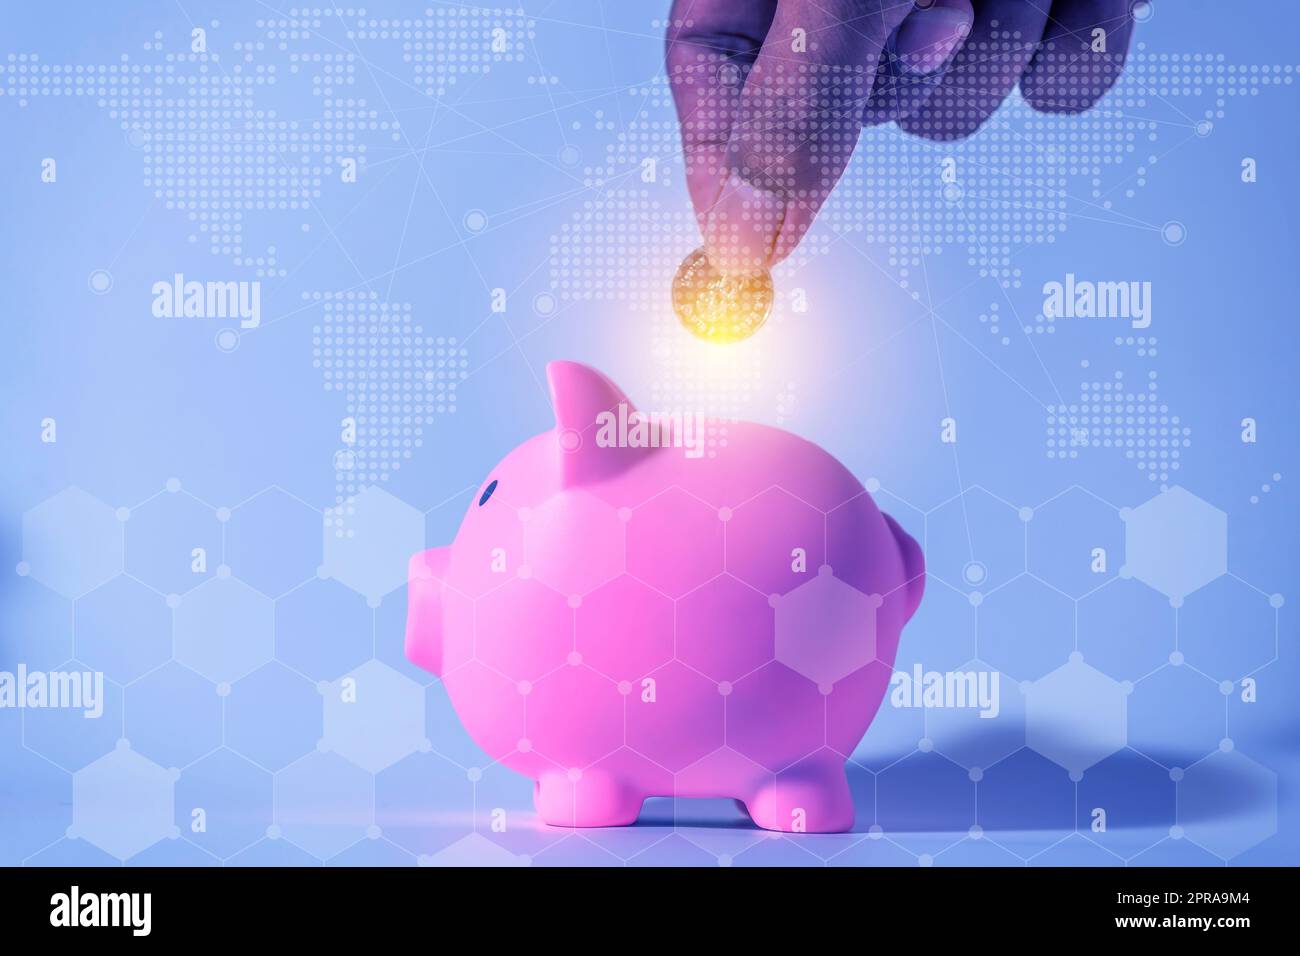 investor online saving concept Stock Photo